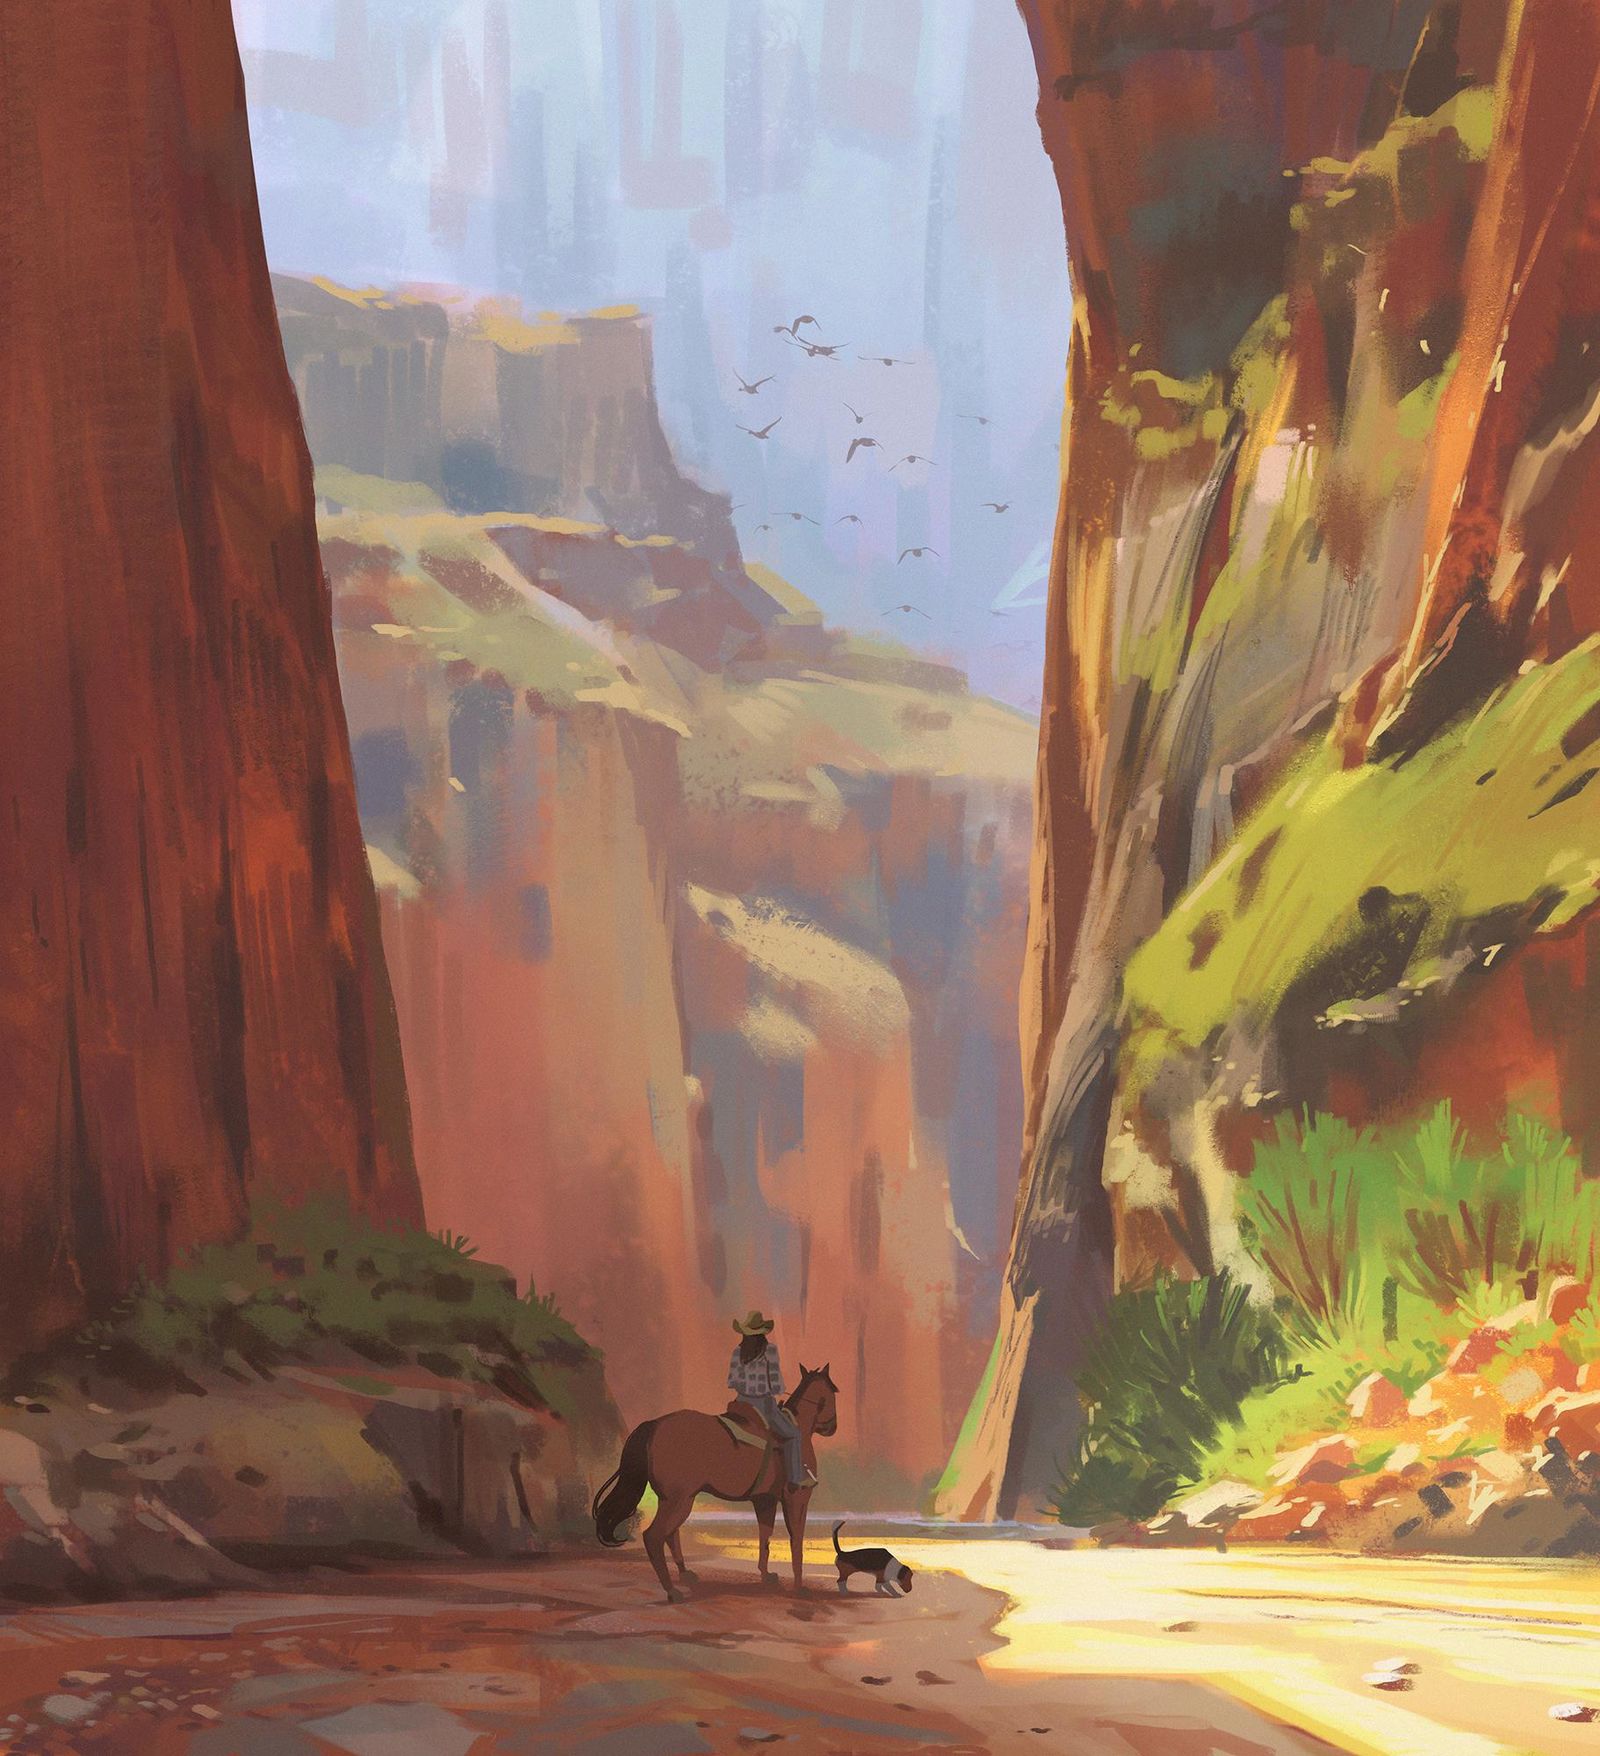 Grand Canyon插画图片壁纸